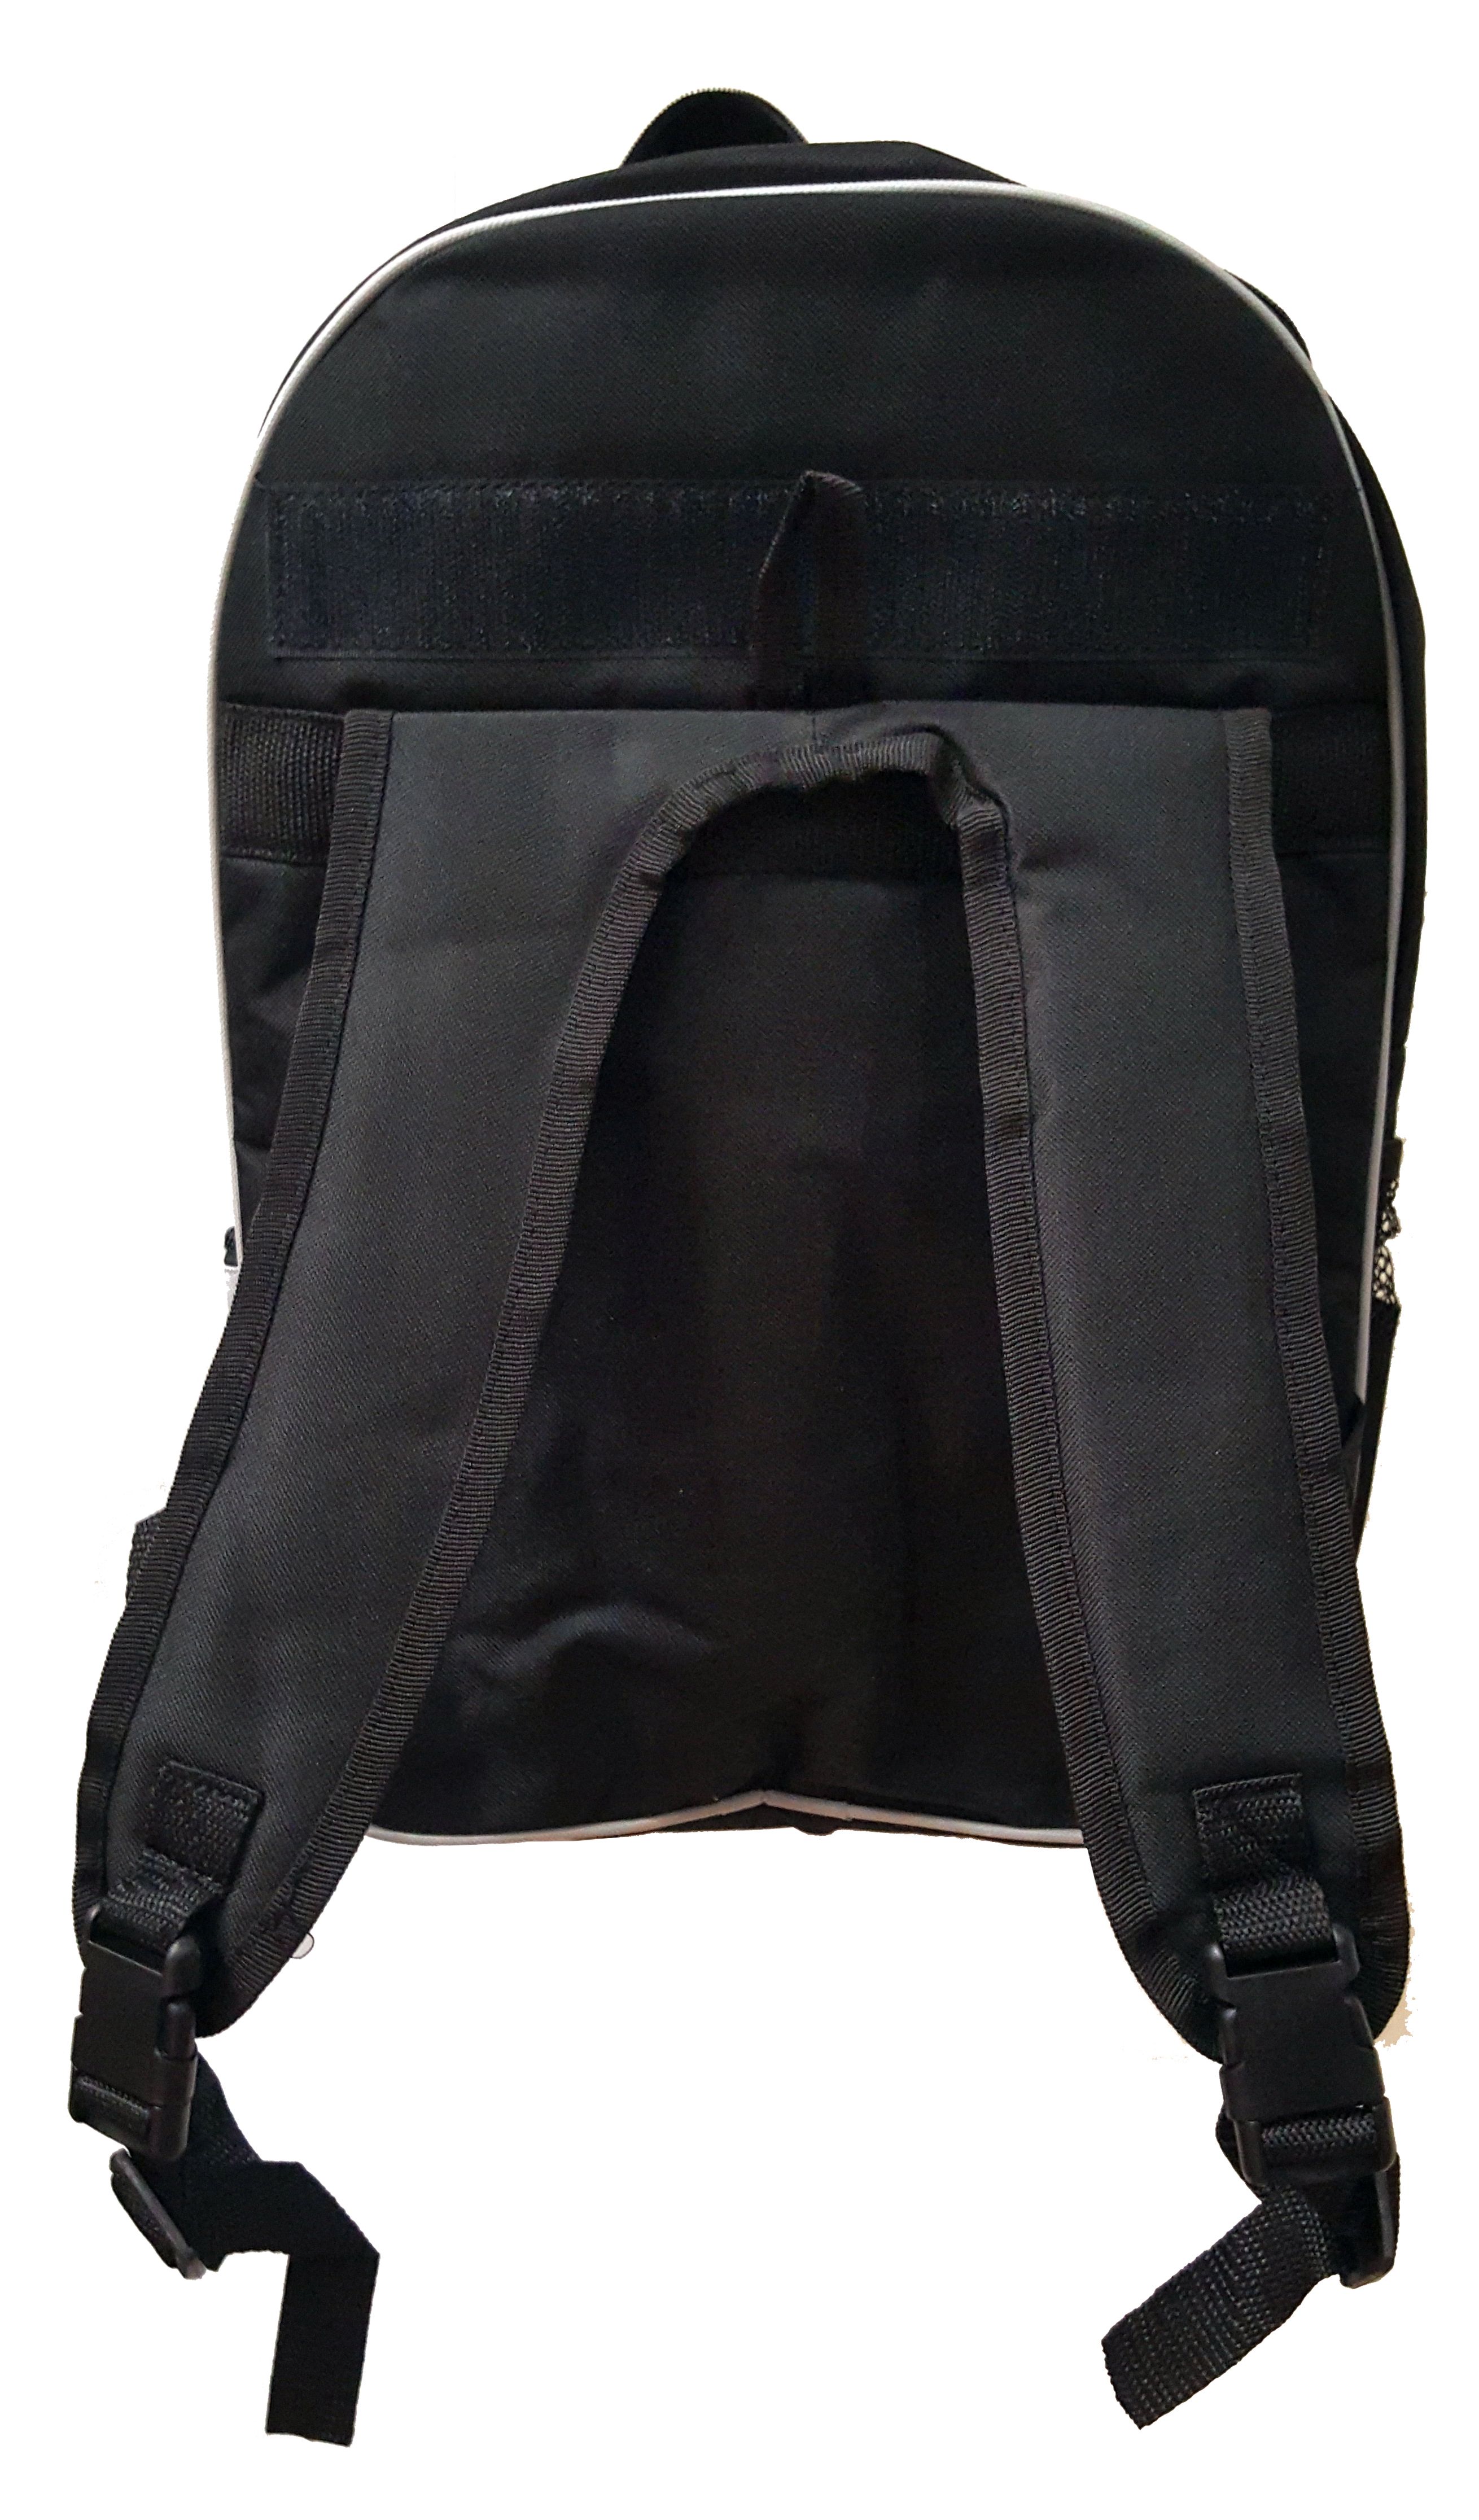 Boys Backpack Camo Large School Backpack - image 4 of 5